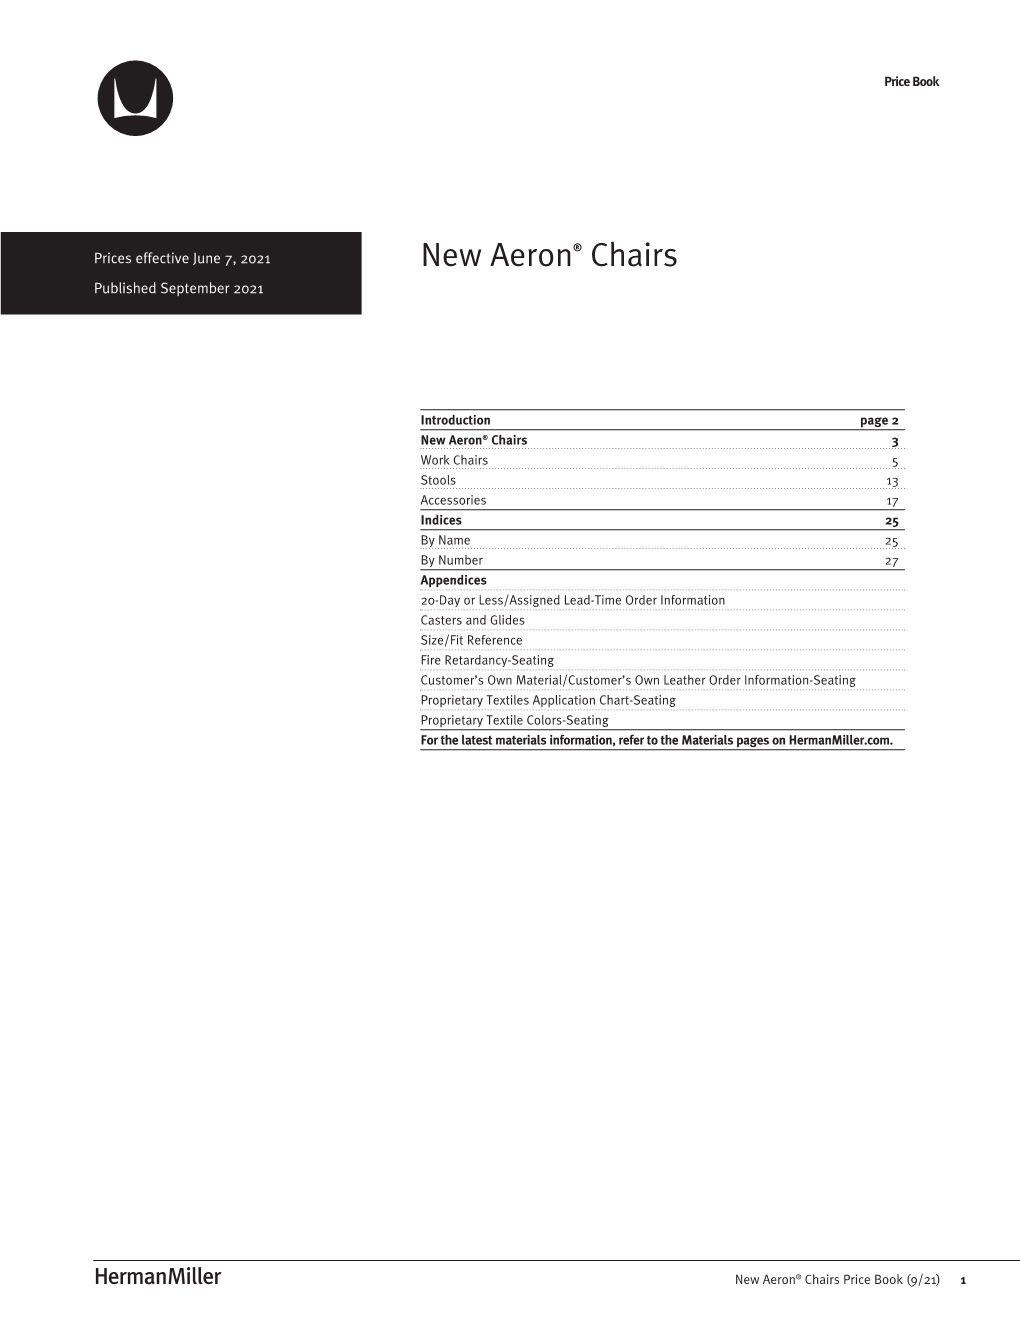 Price Book: New Aeron Chairs